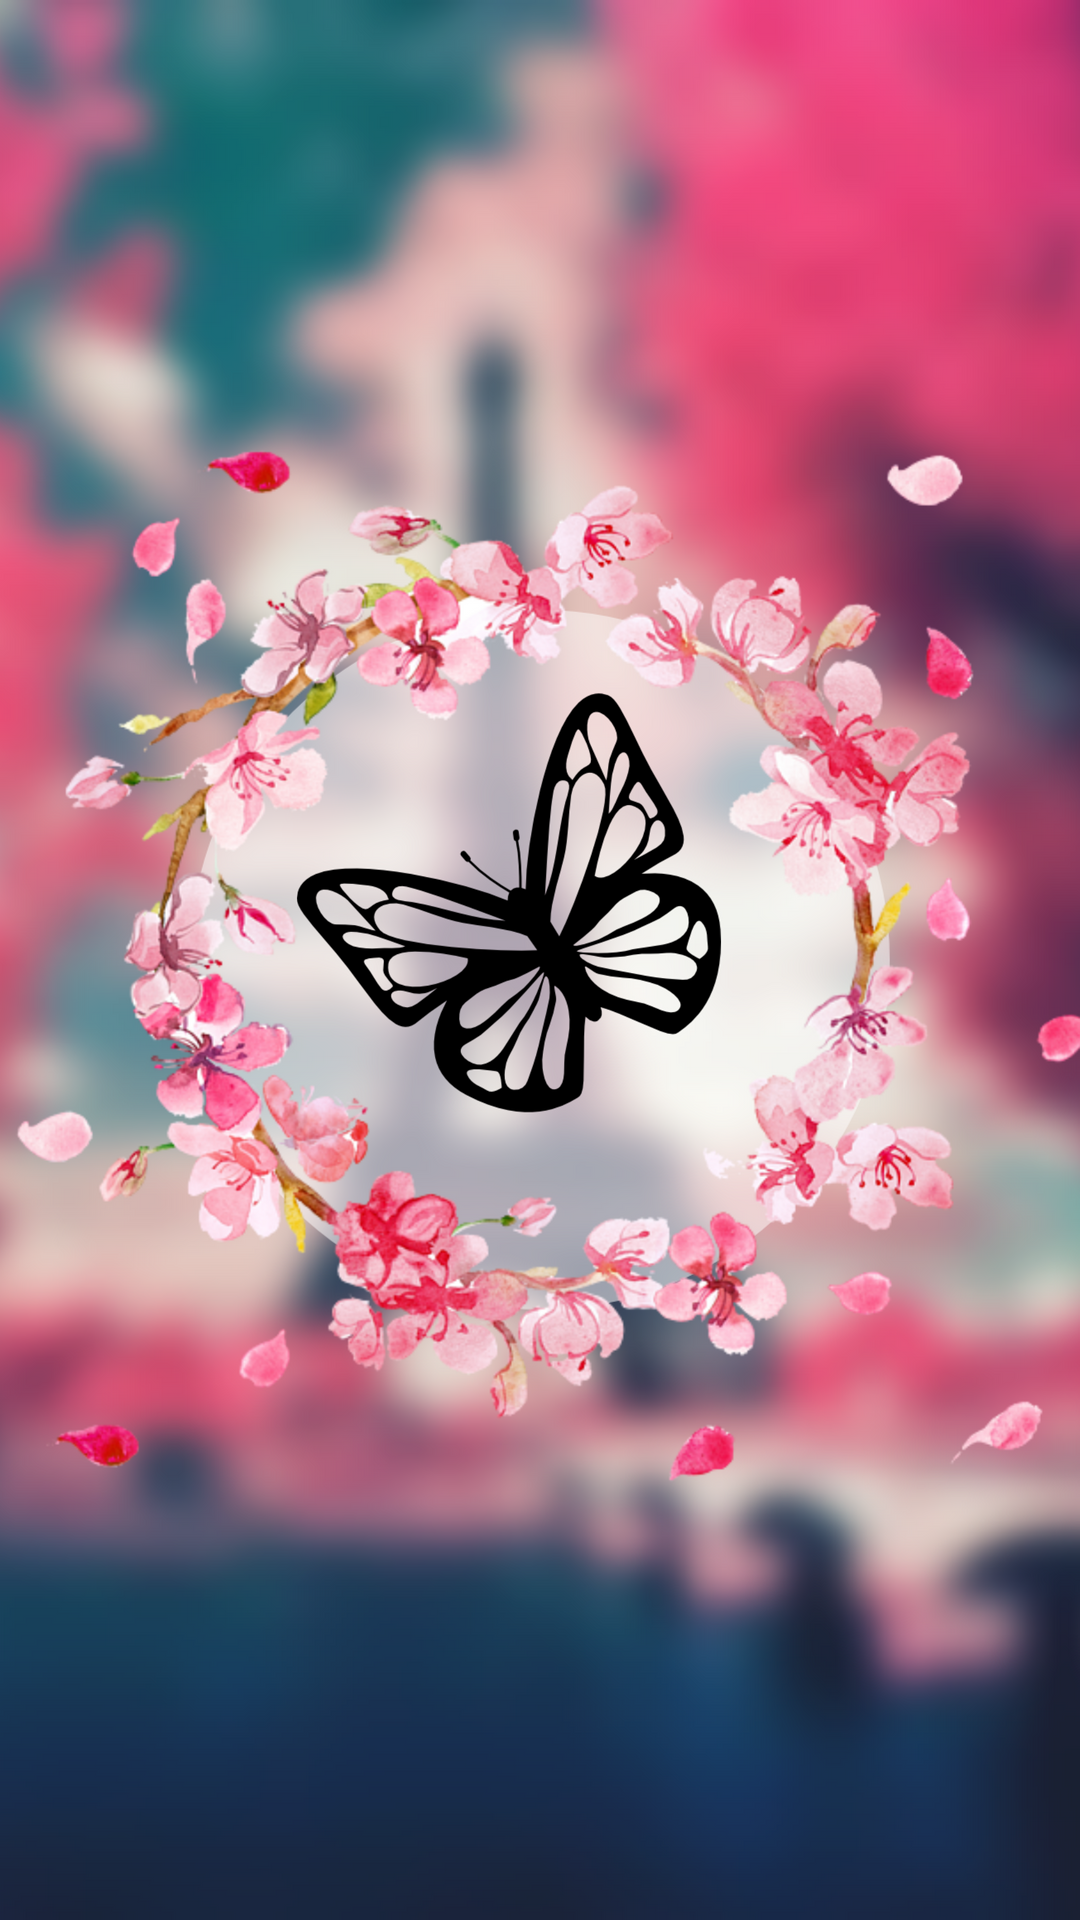 aplicativo de壁紙,ピンク,バタフライ,春,空,グラフィックデザイン